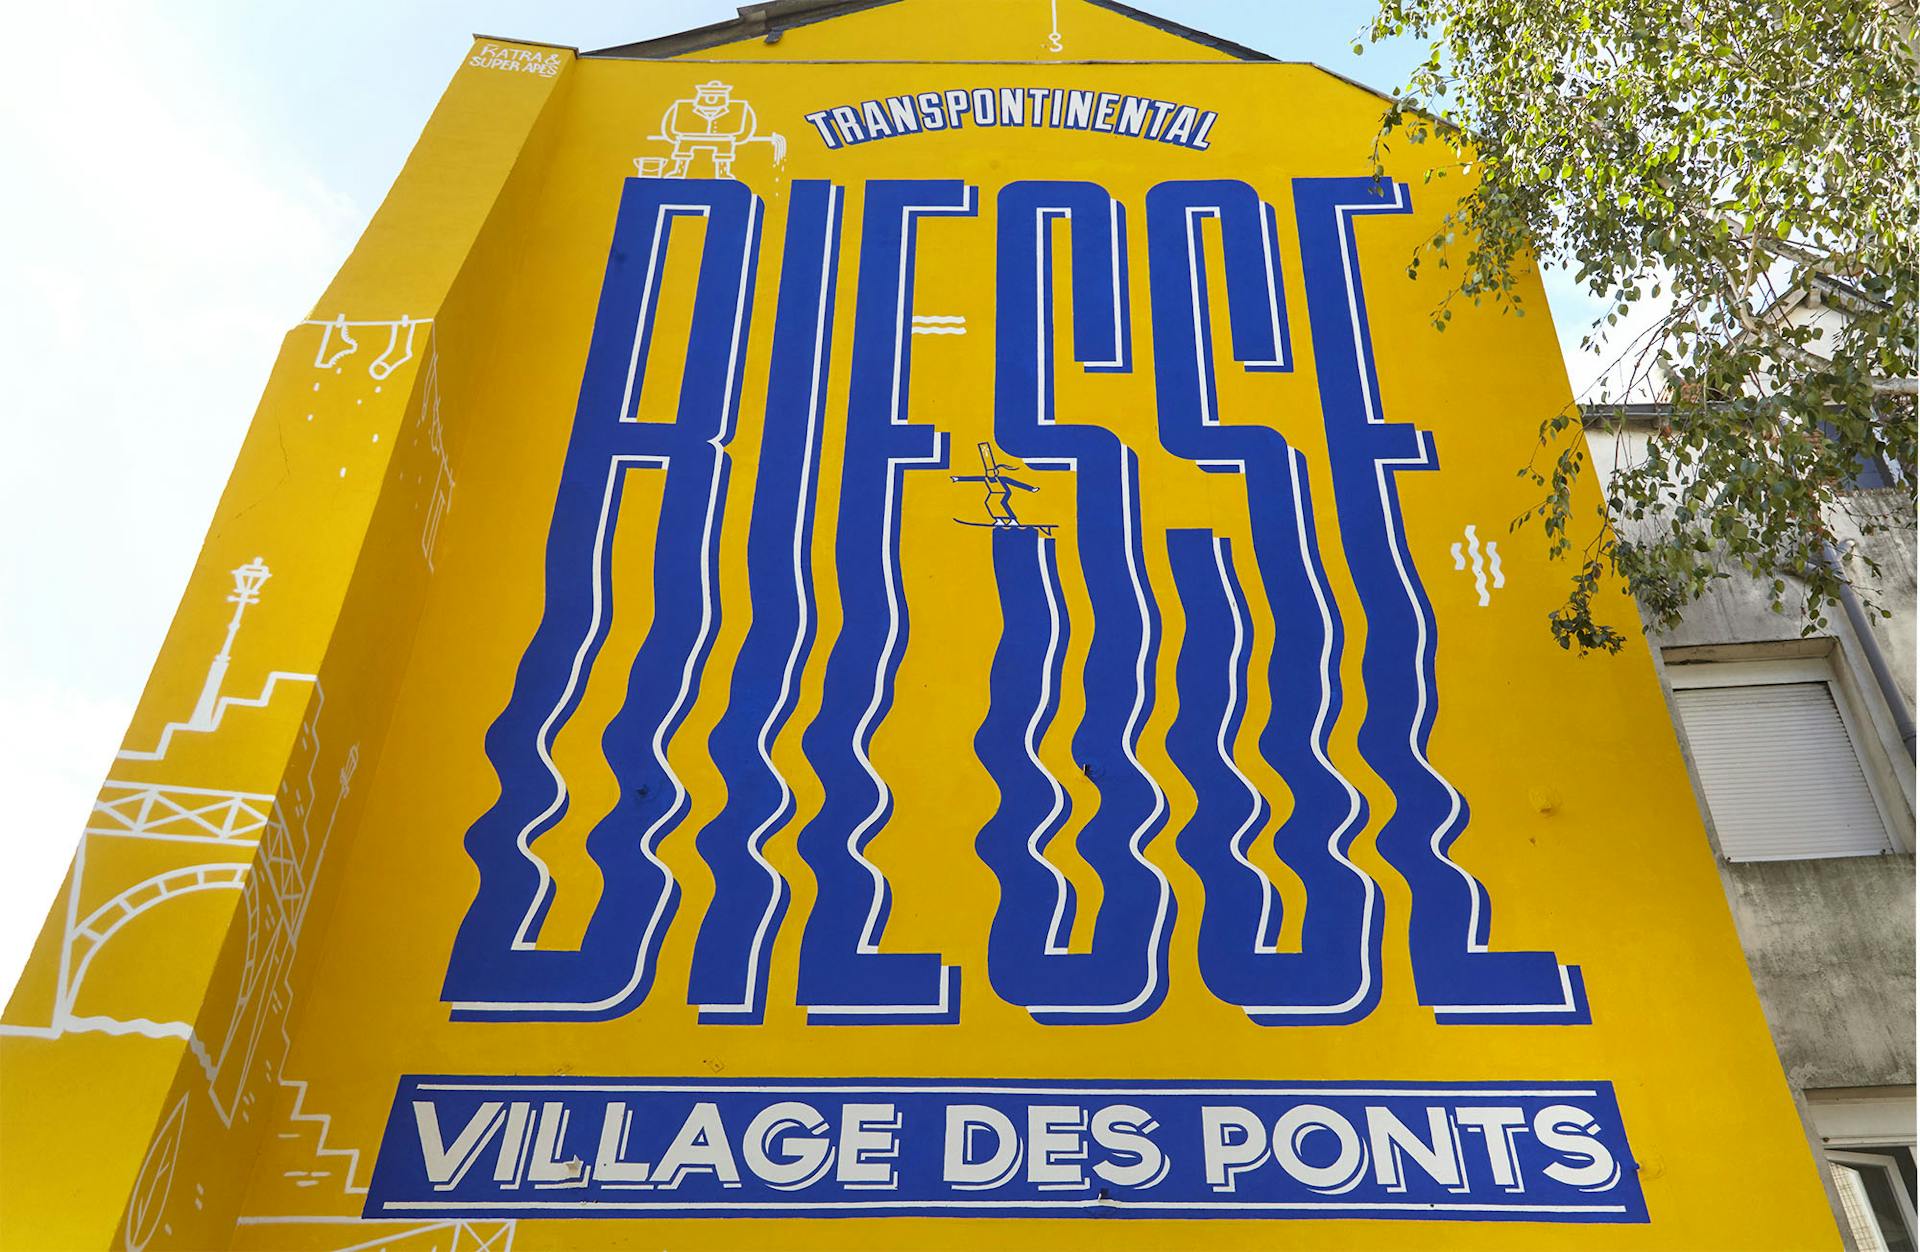 Street Art sur façade de bâtiment rue Biesse Nantes. 